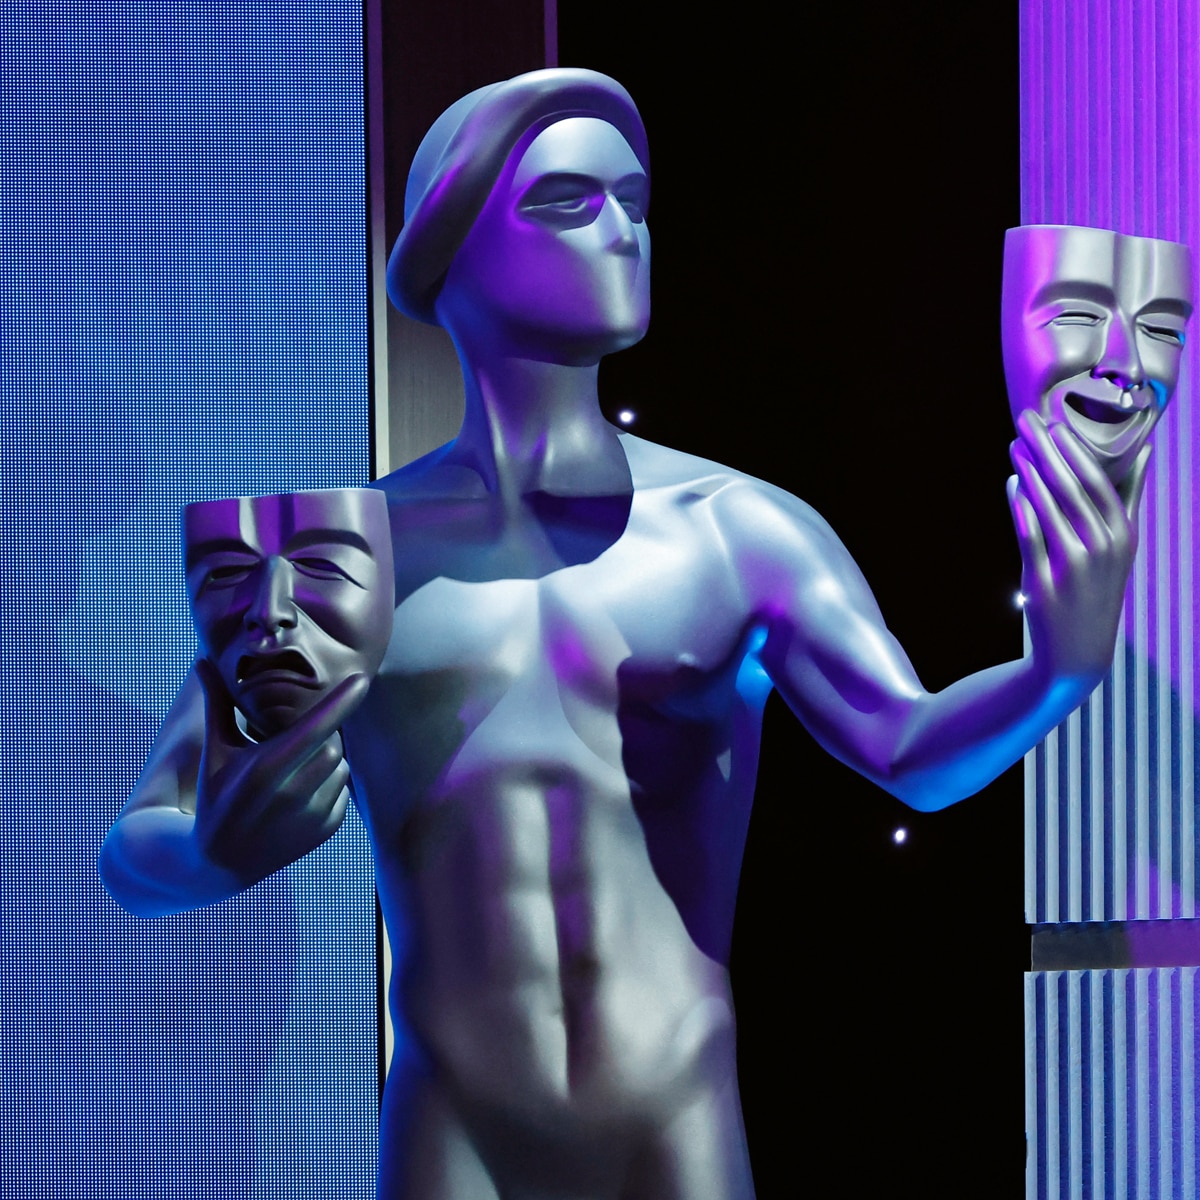 Screen Actors Guild, The Actor, statuette, trophy